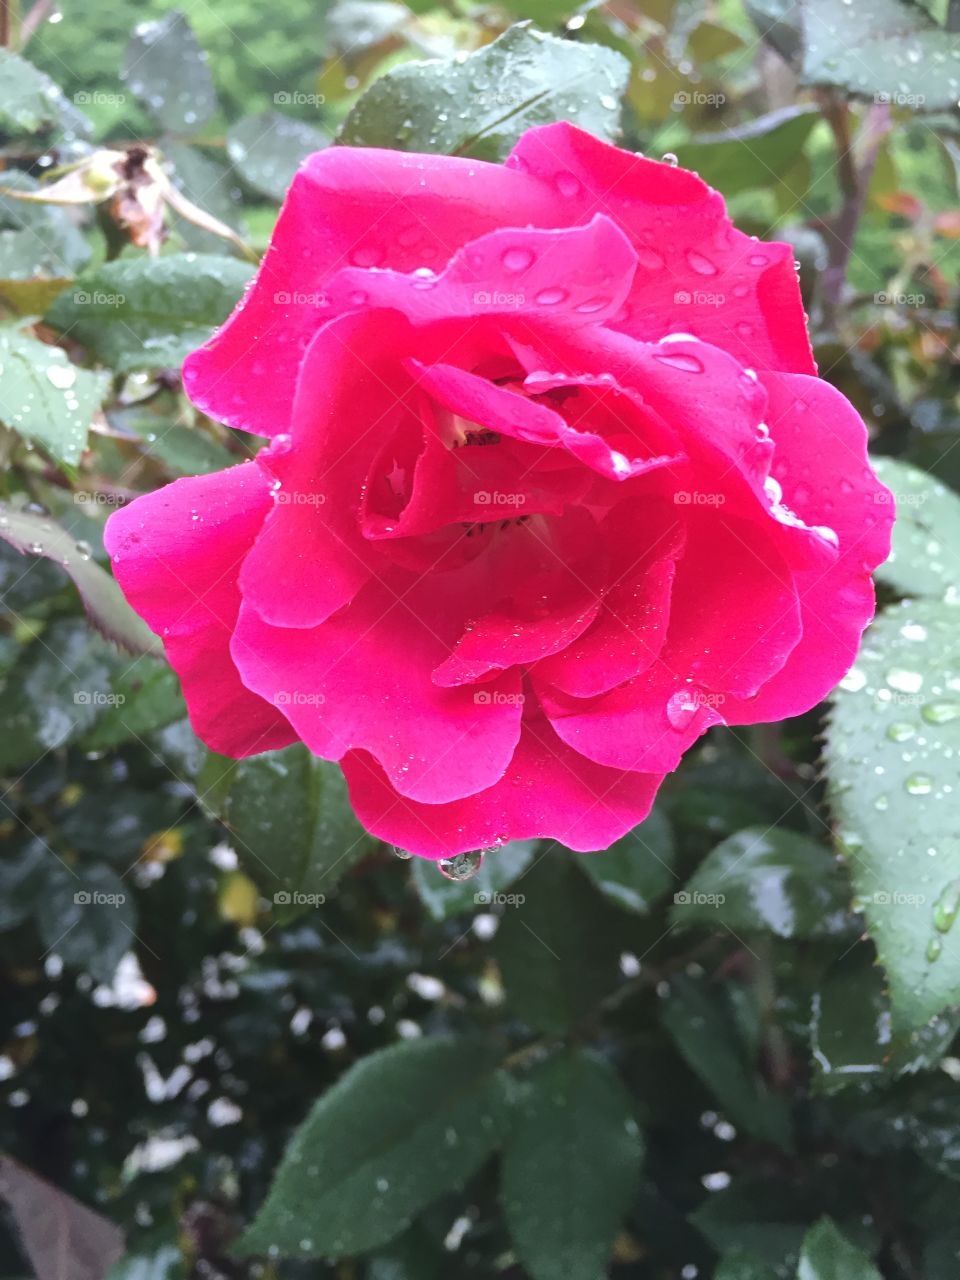 Raindrops on the rose petals 